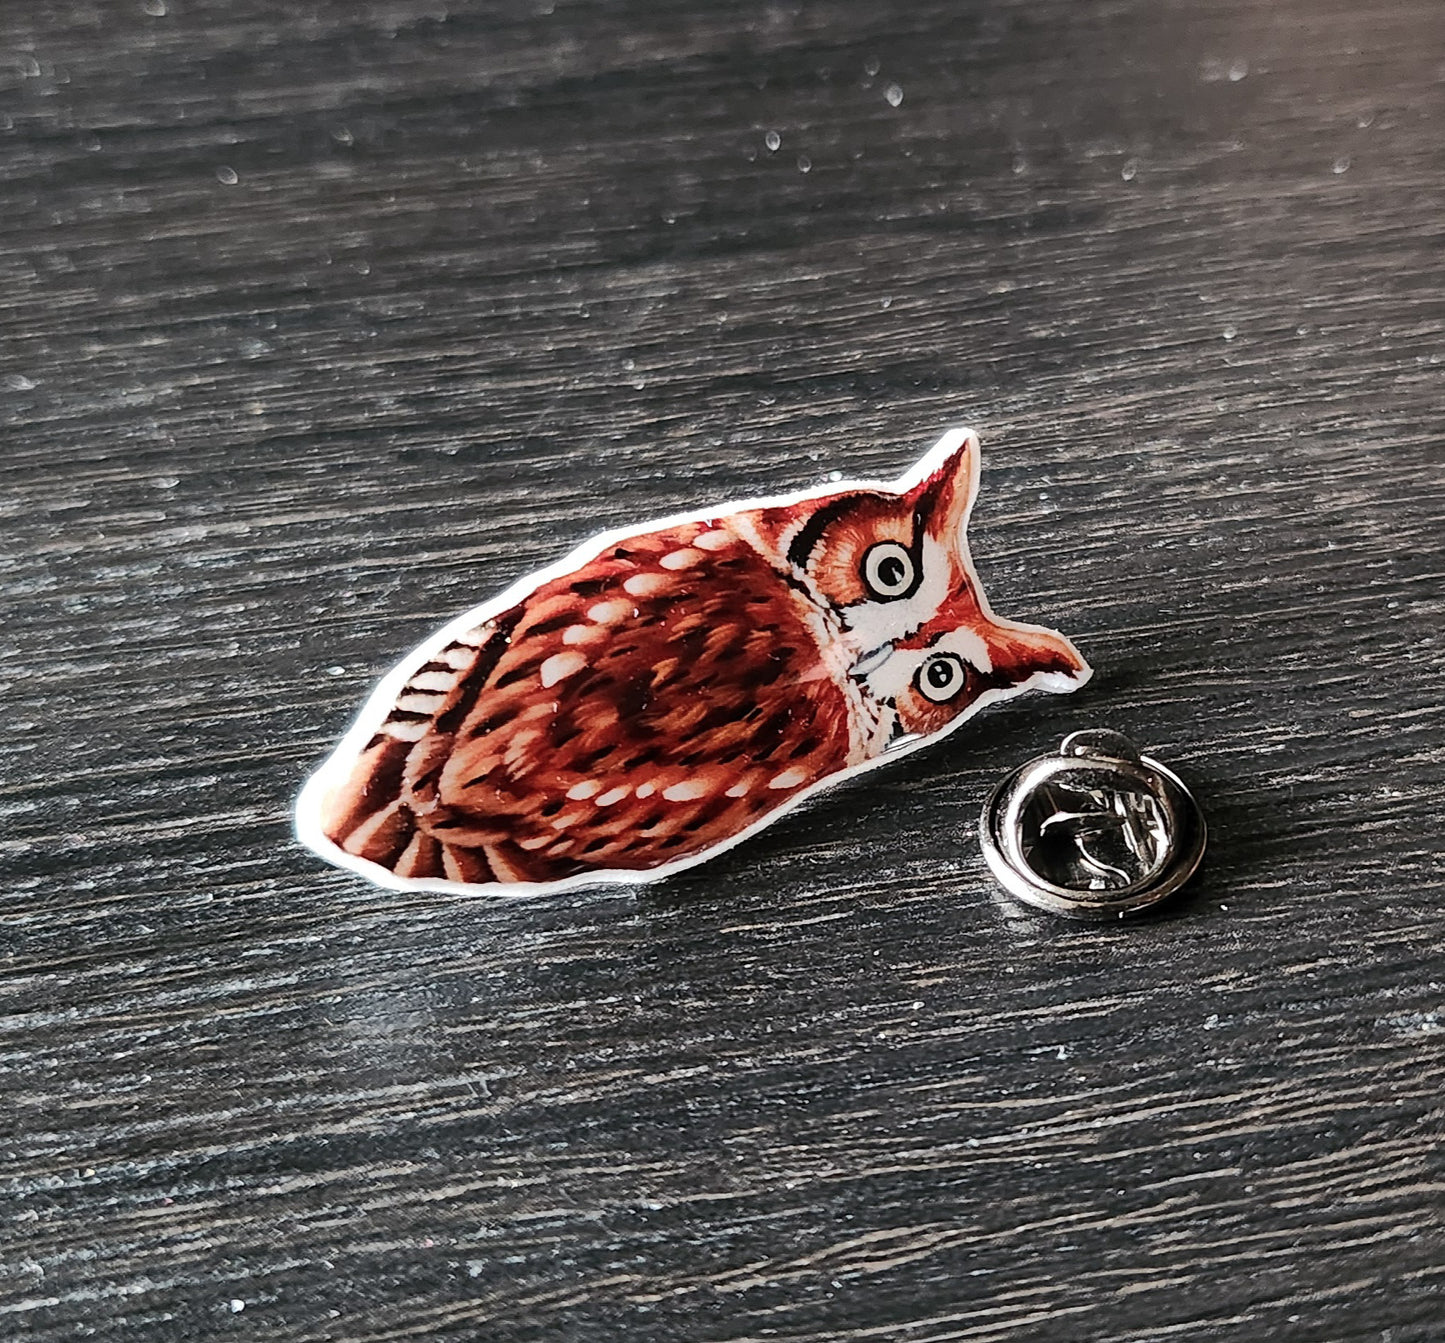 Screech Owl - Resin Coated Polystyrene Pin - 100% Handmade Bird Pin, Red Screech Owl